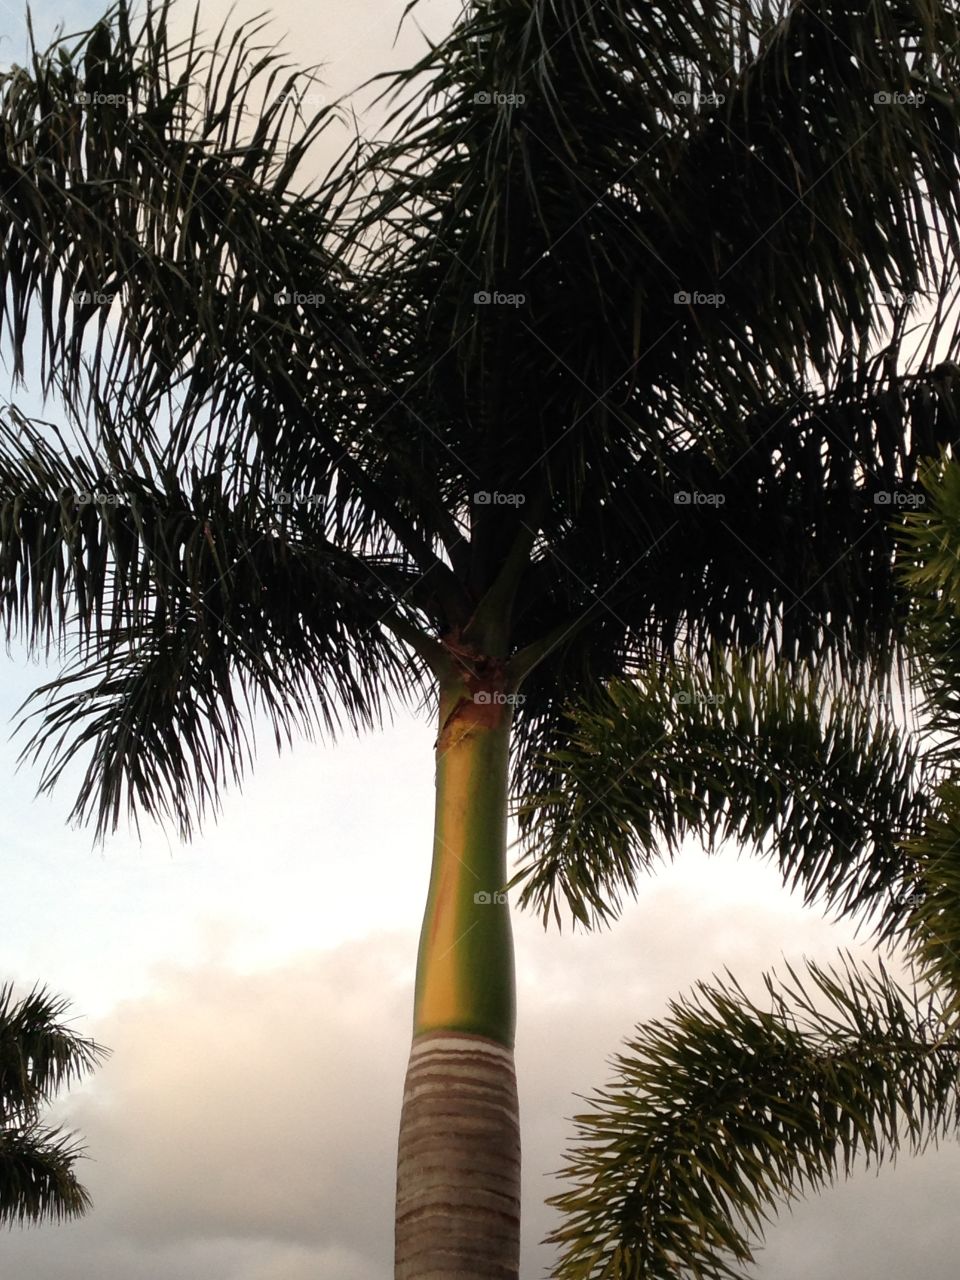 Florida
Palm